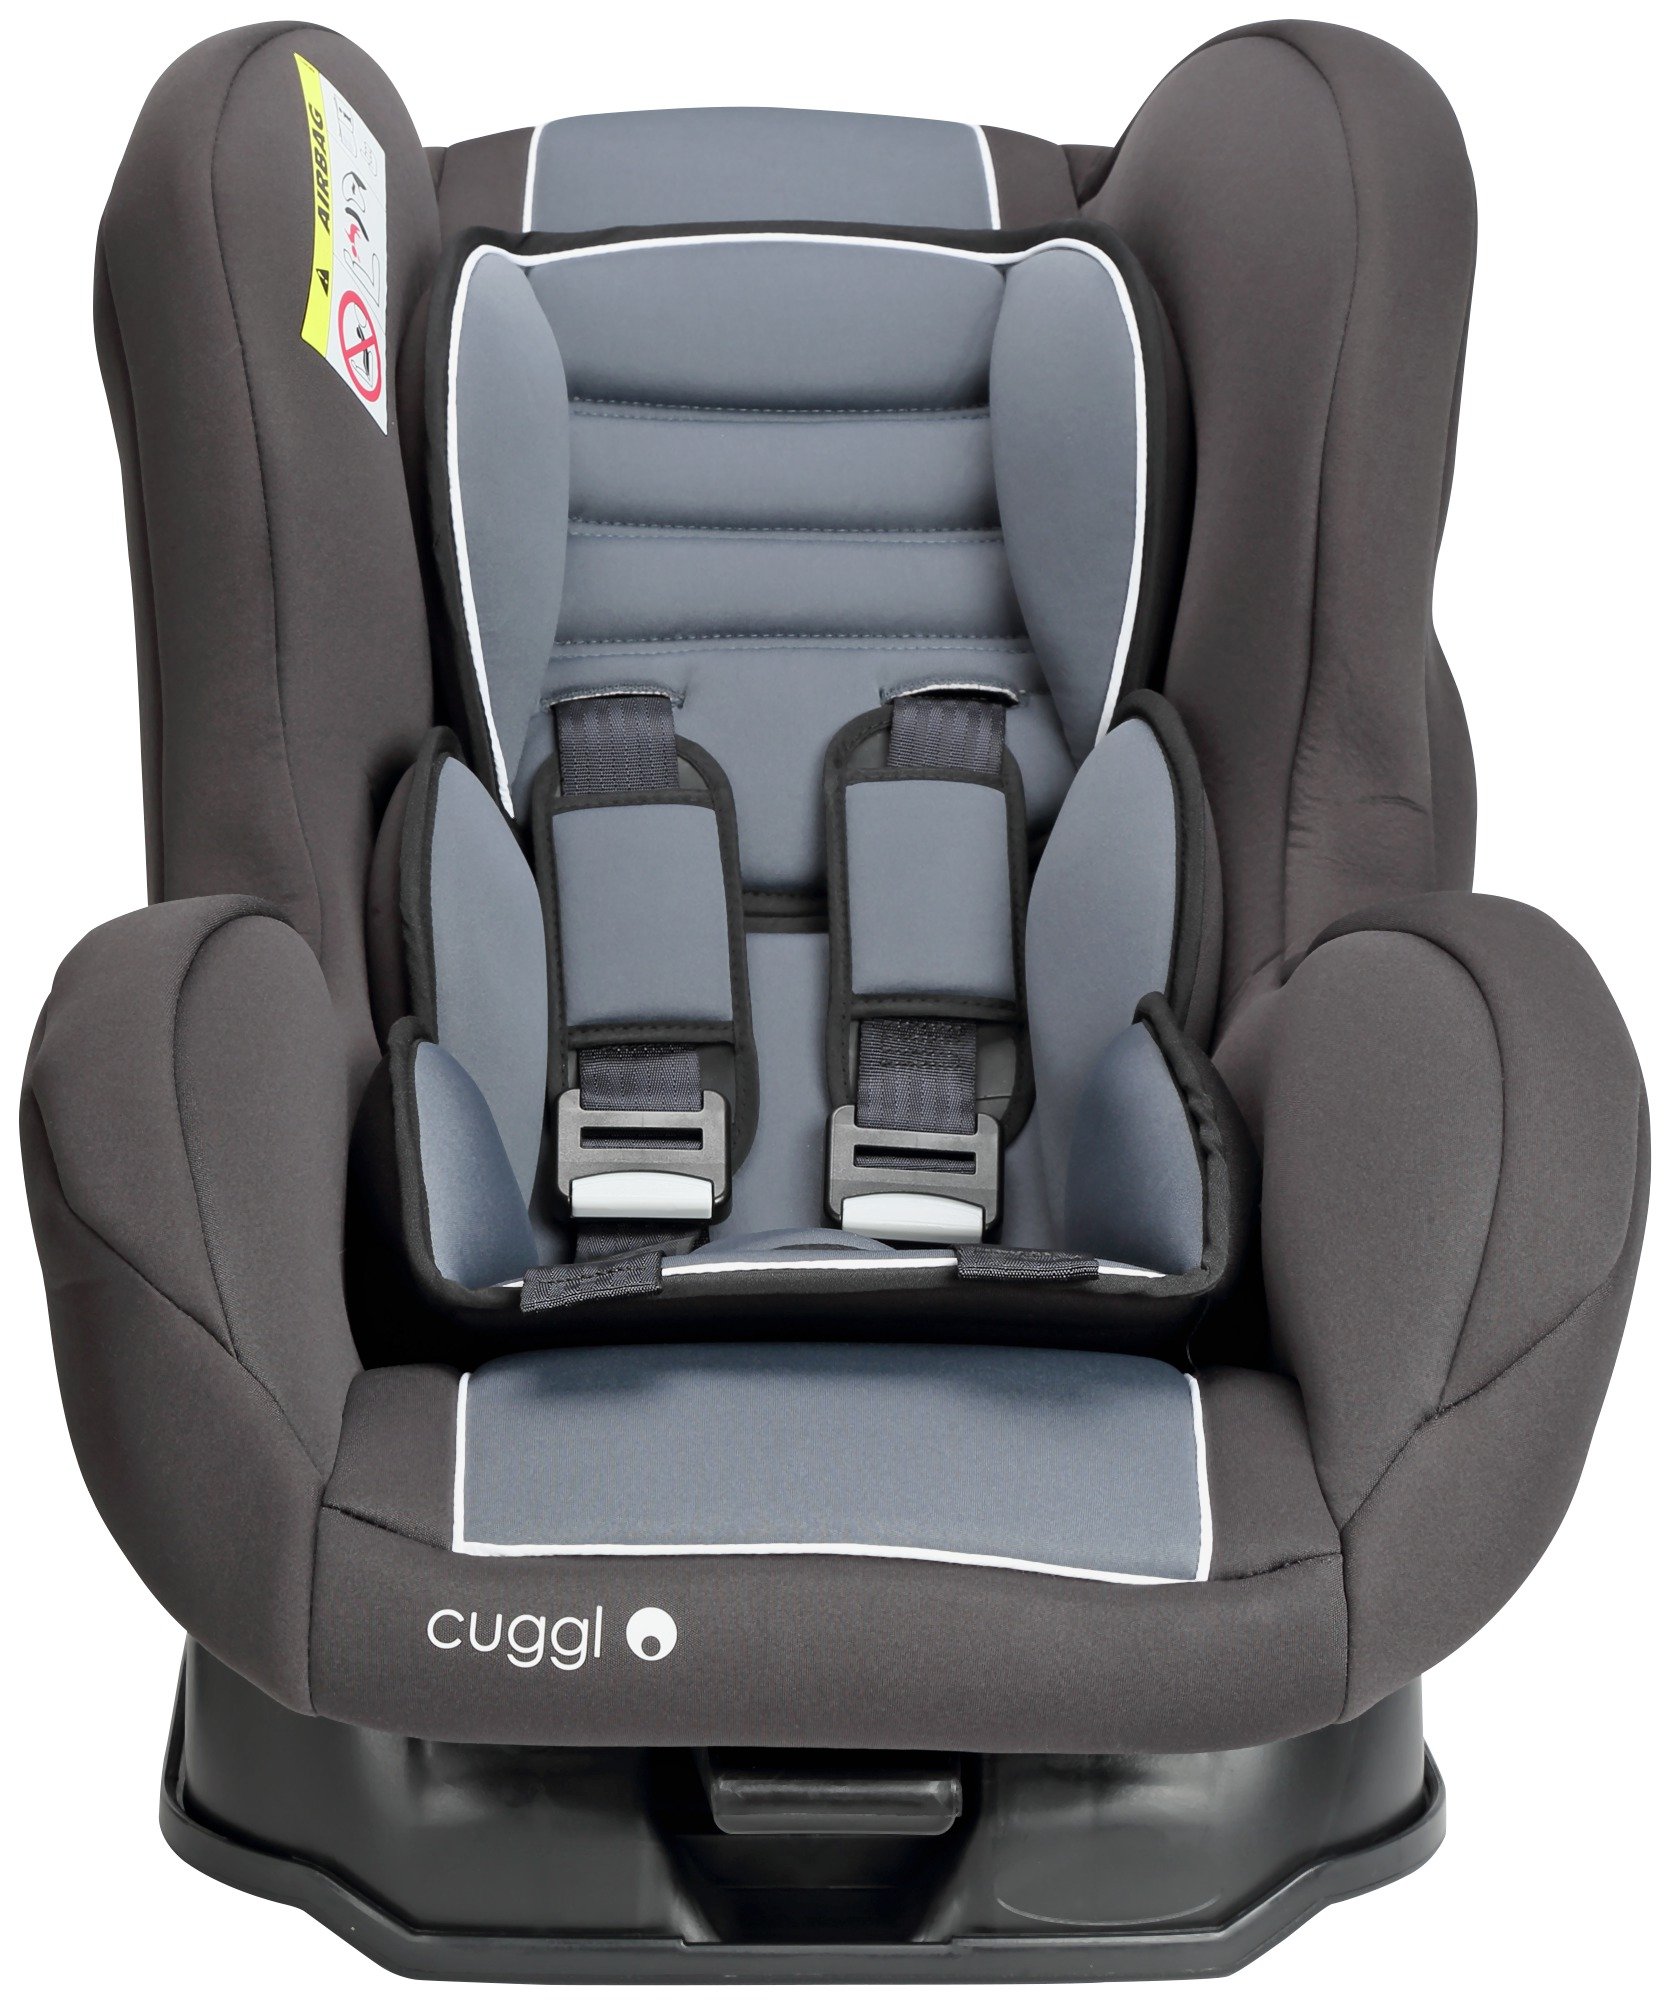 Cuggl Woodlark Group 0/1/2 Car Seat Review